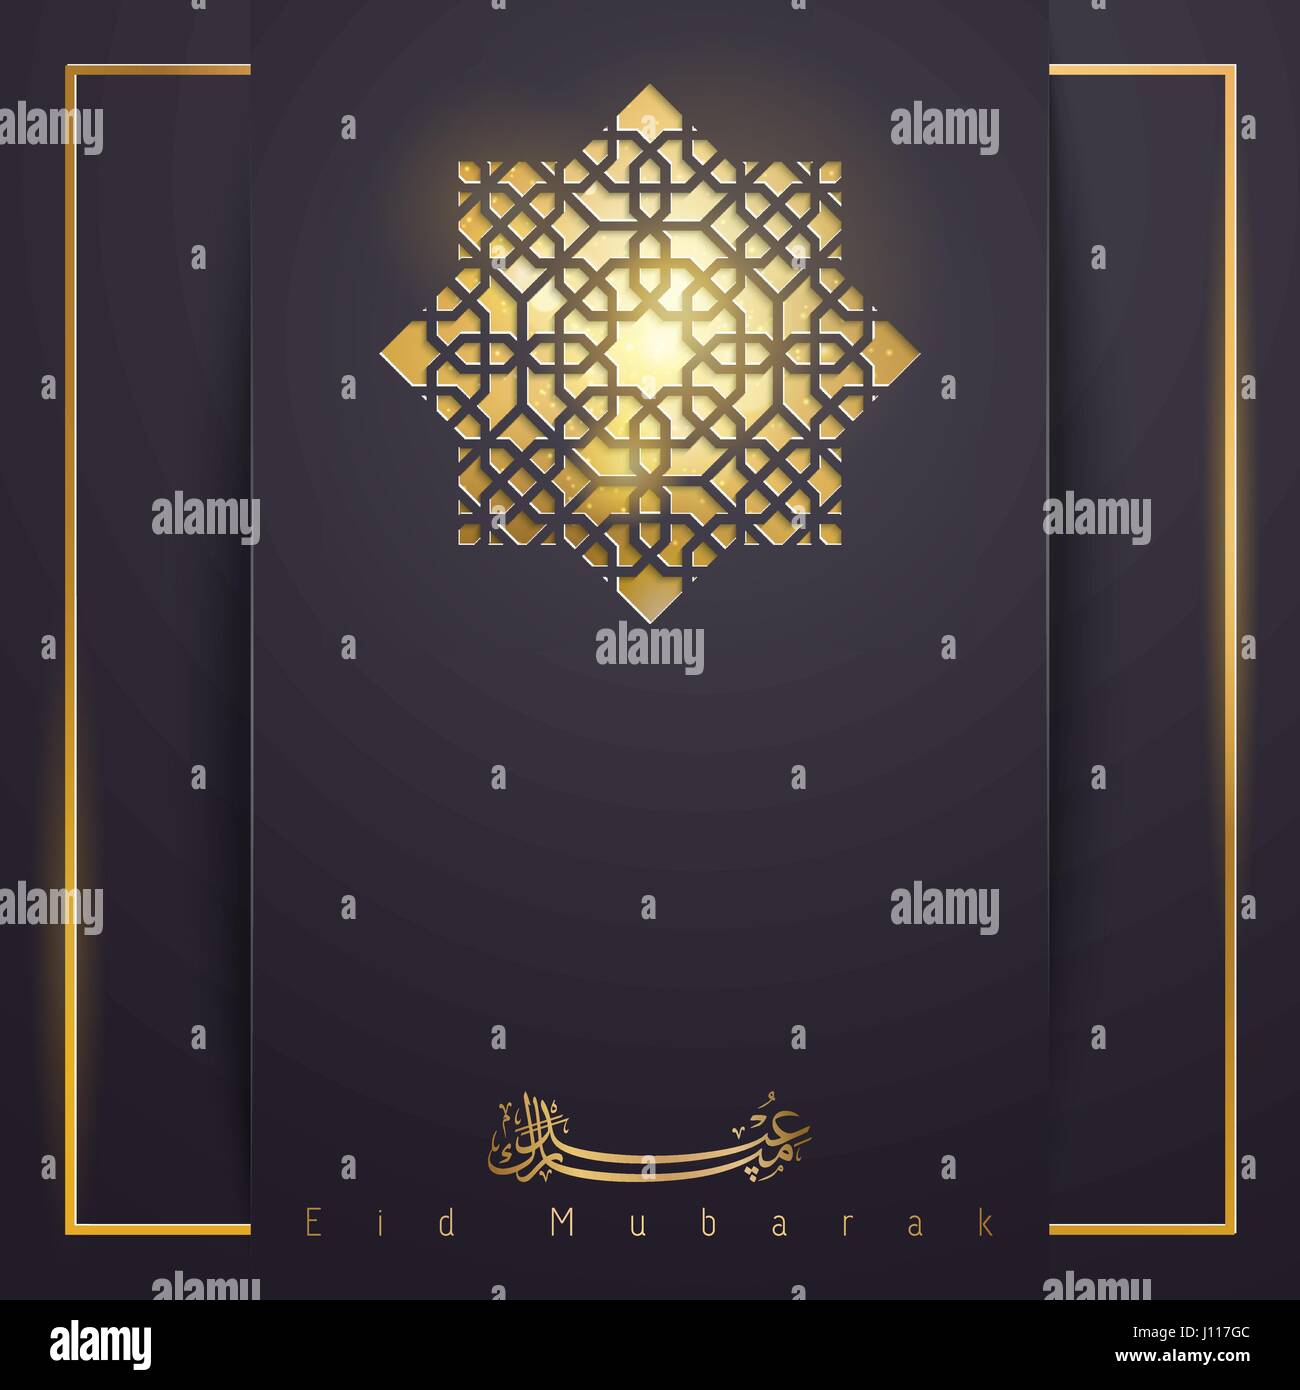 Islamic Vector Cover Or Poster Background Design For Eid Mubarak Stock Vector Image Art Alamy